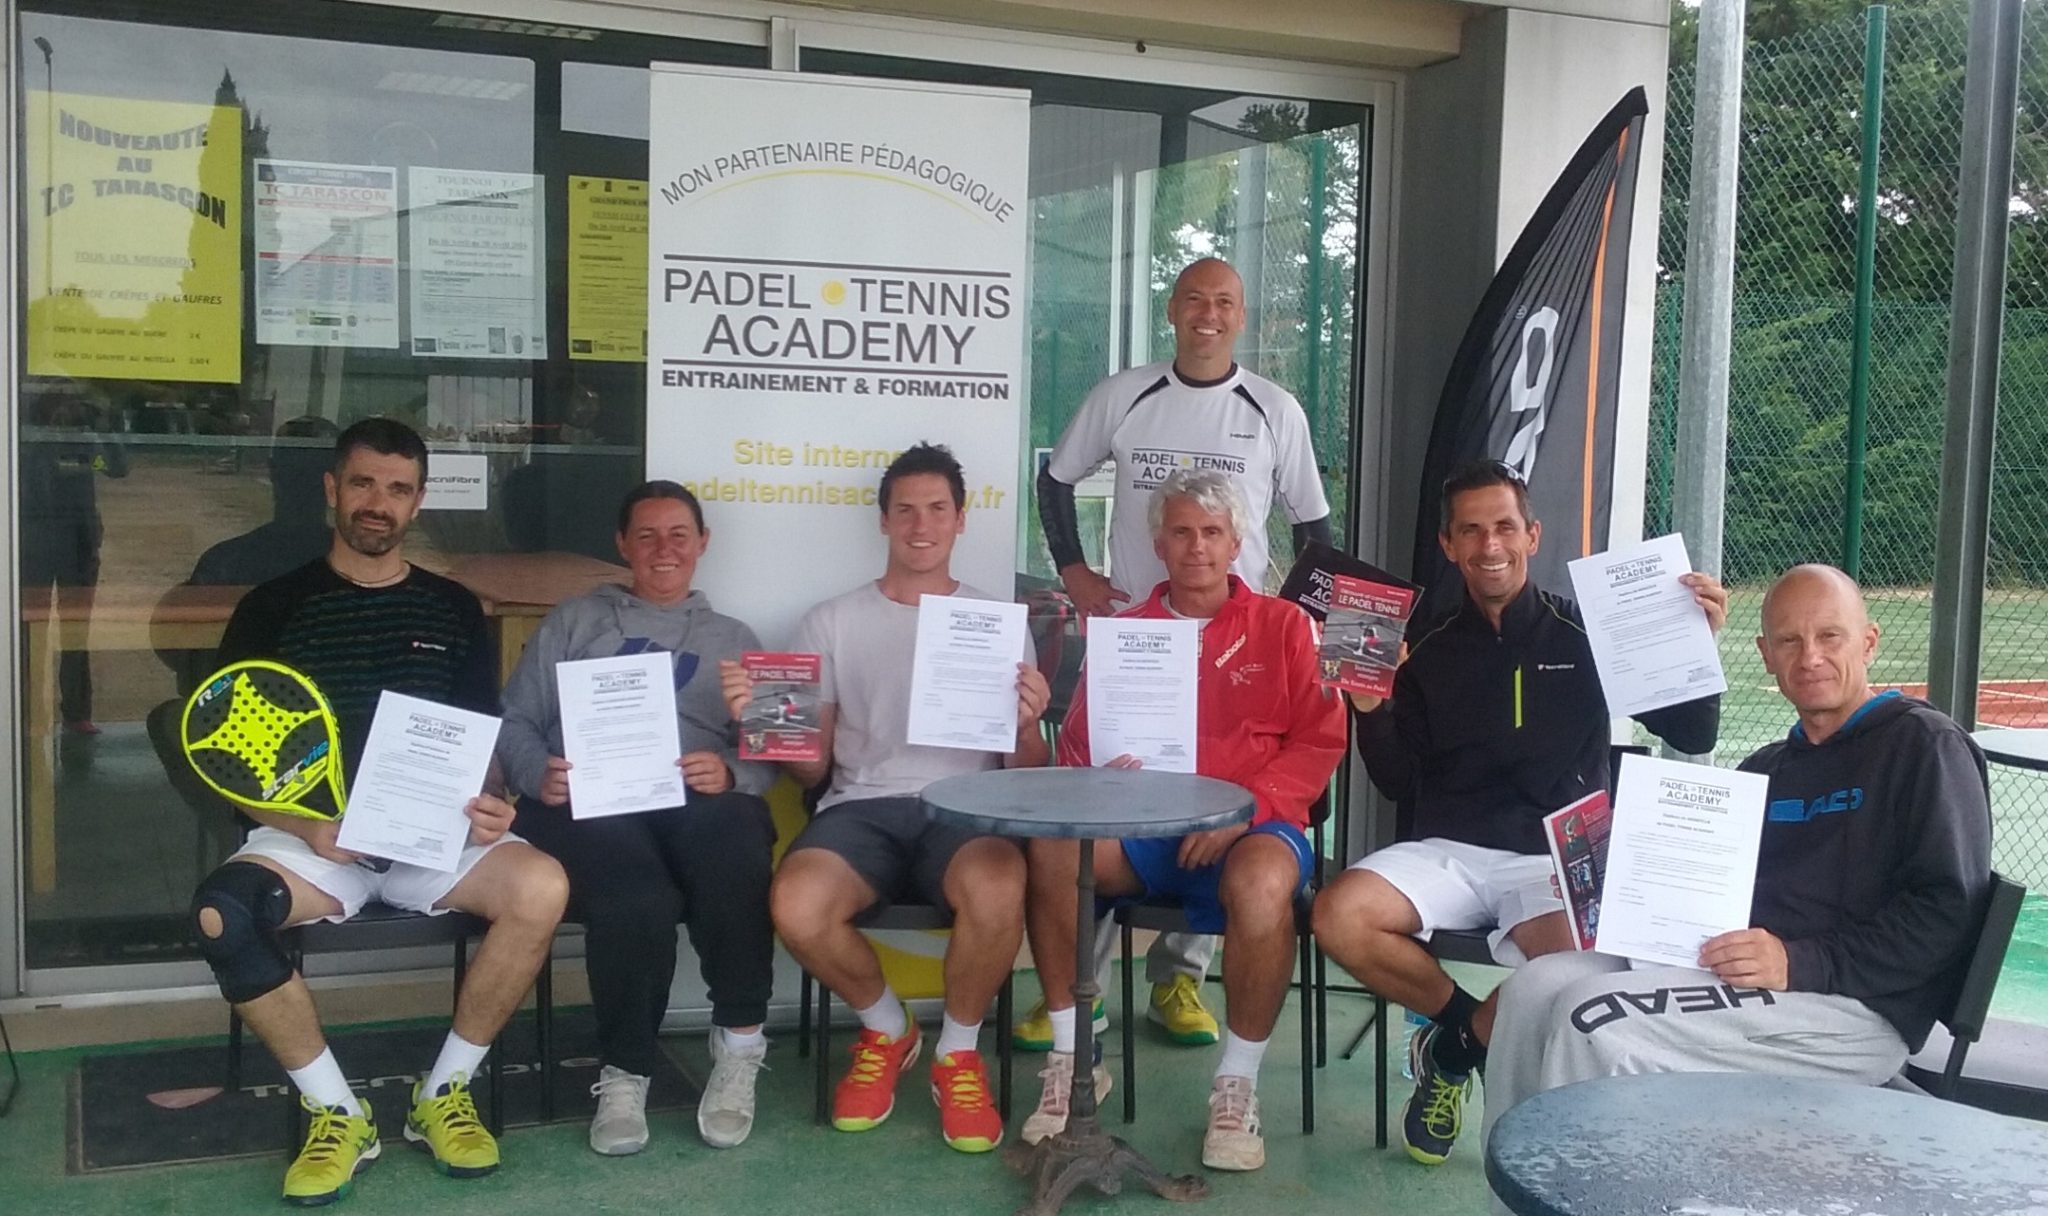 inauguration du Tennis Club de Tarascon avec Padel Tennis Academy